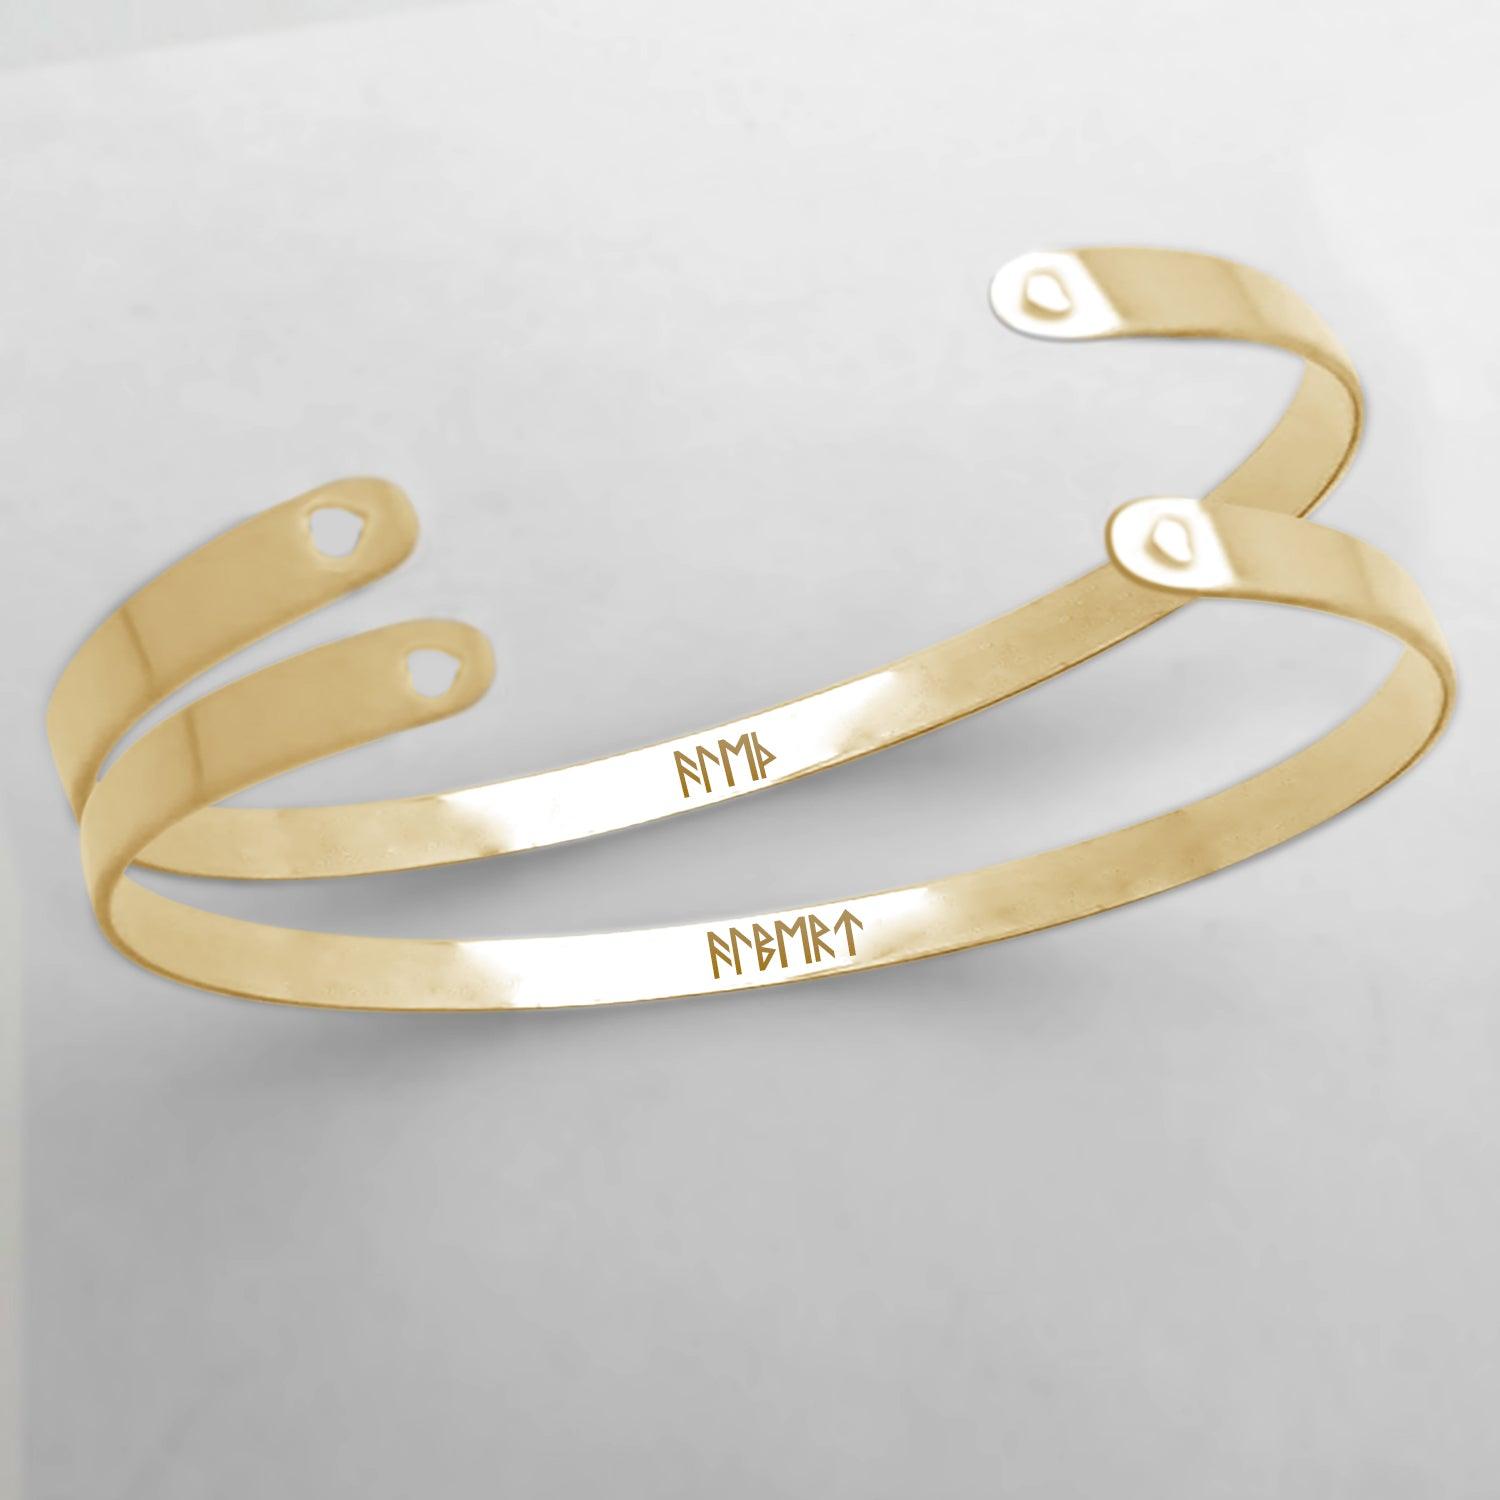 Awesome Design Single Bracelet-Awesome Design Single Bracelet